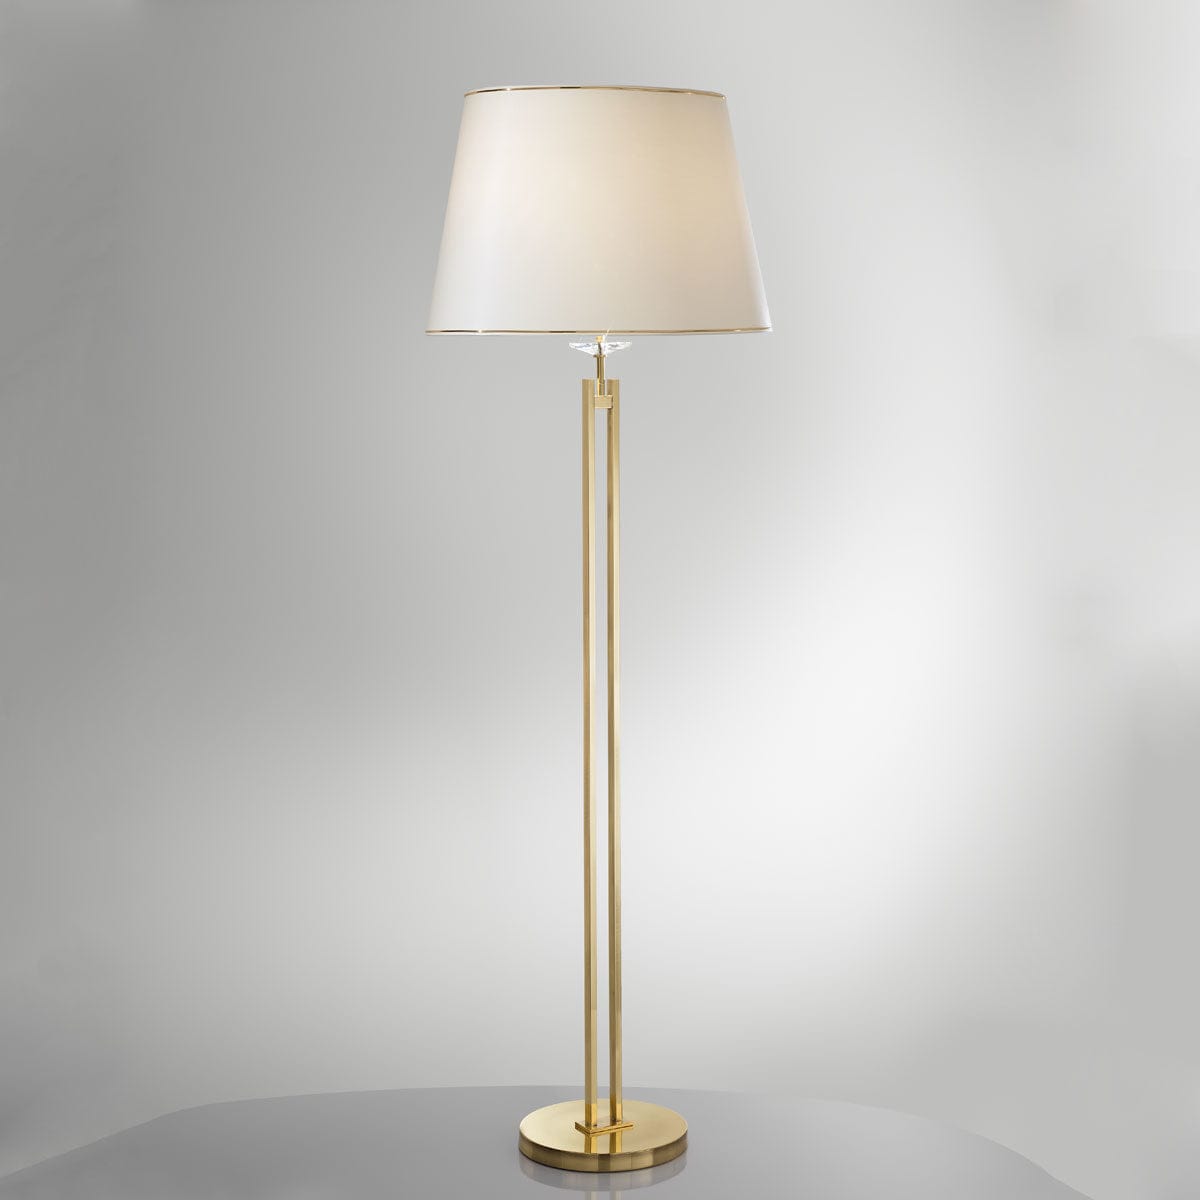 Kolarz Floor Lamp Imperial Floor Lamp, English Brass, 2 lights